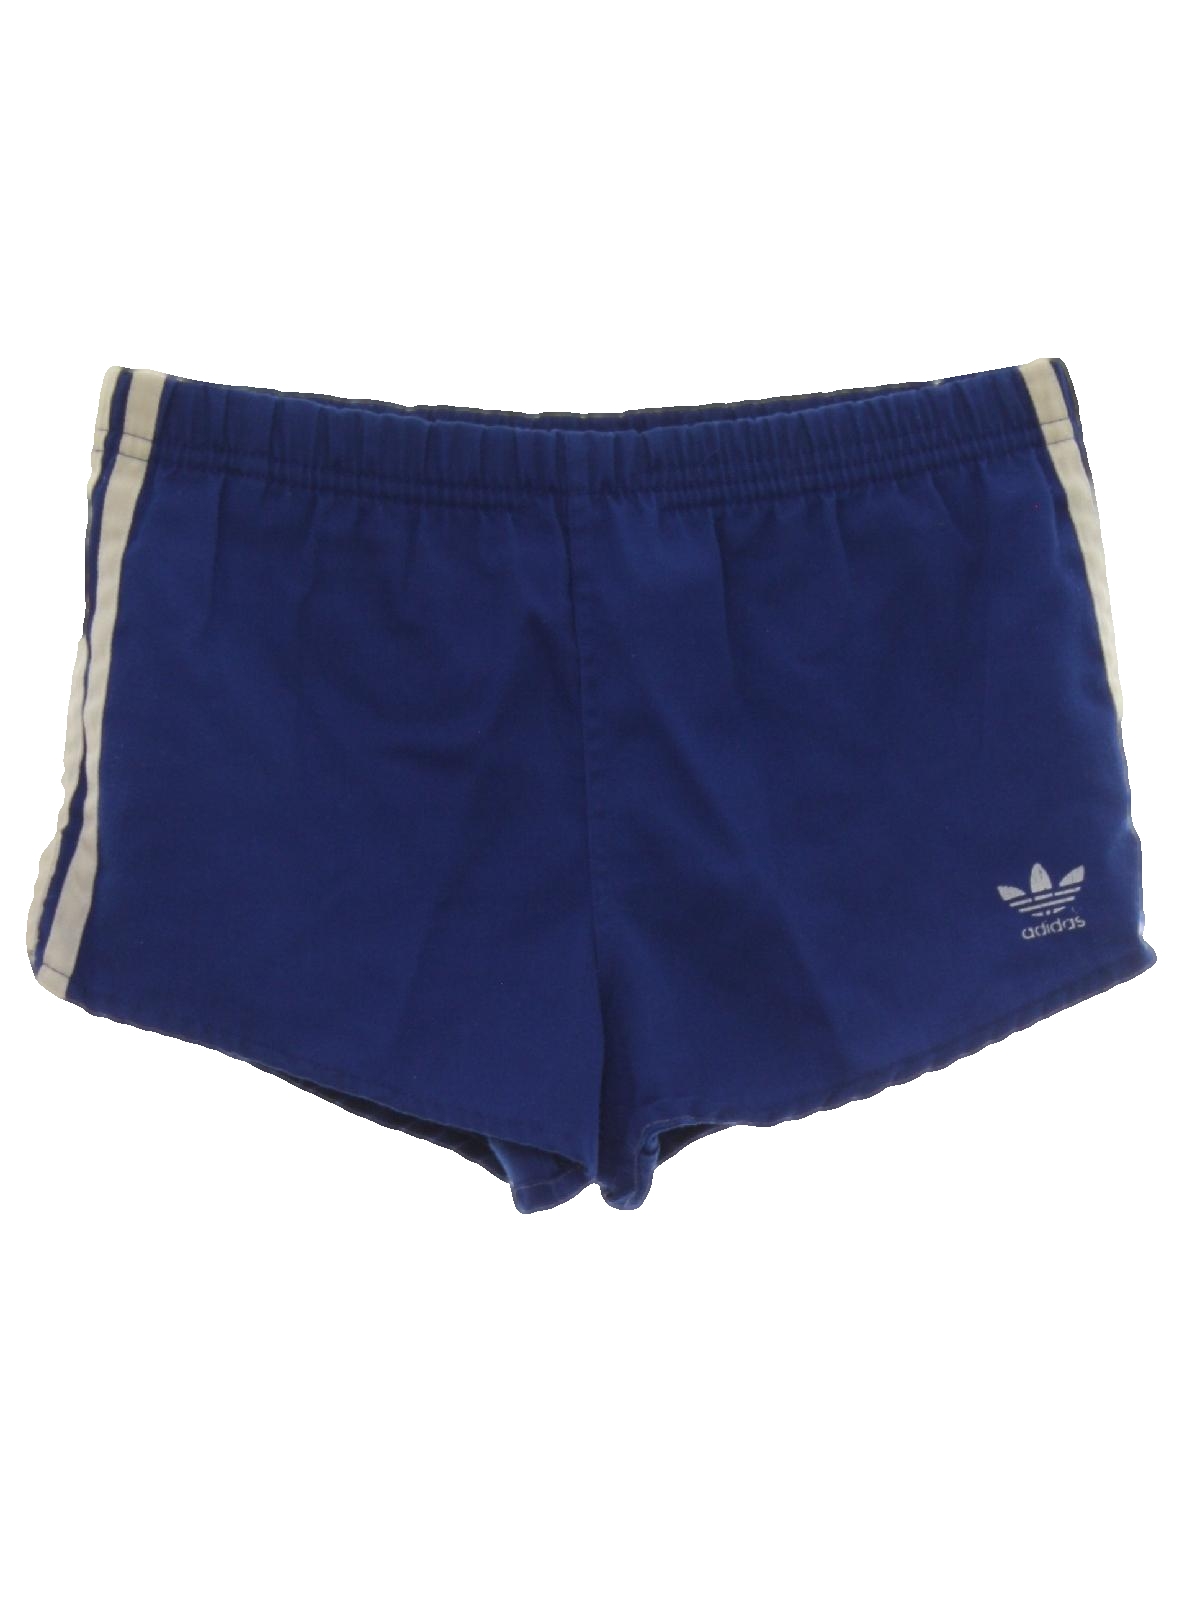 Retro 1980's Shorts (Adidas) : 80s -Adidas- Mens royal blue background ...